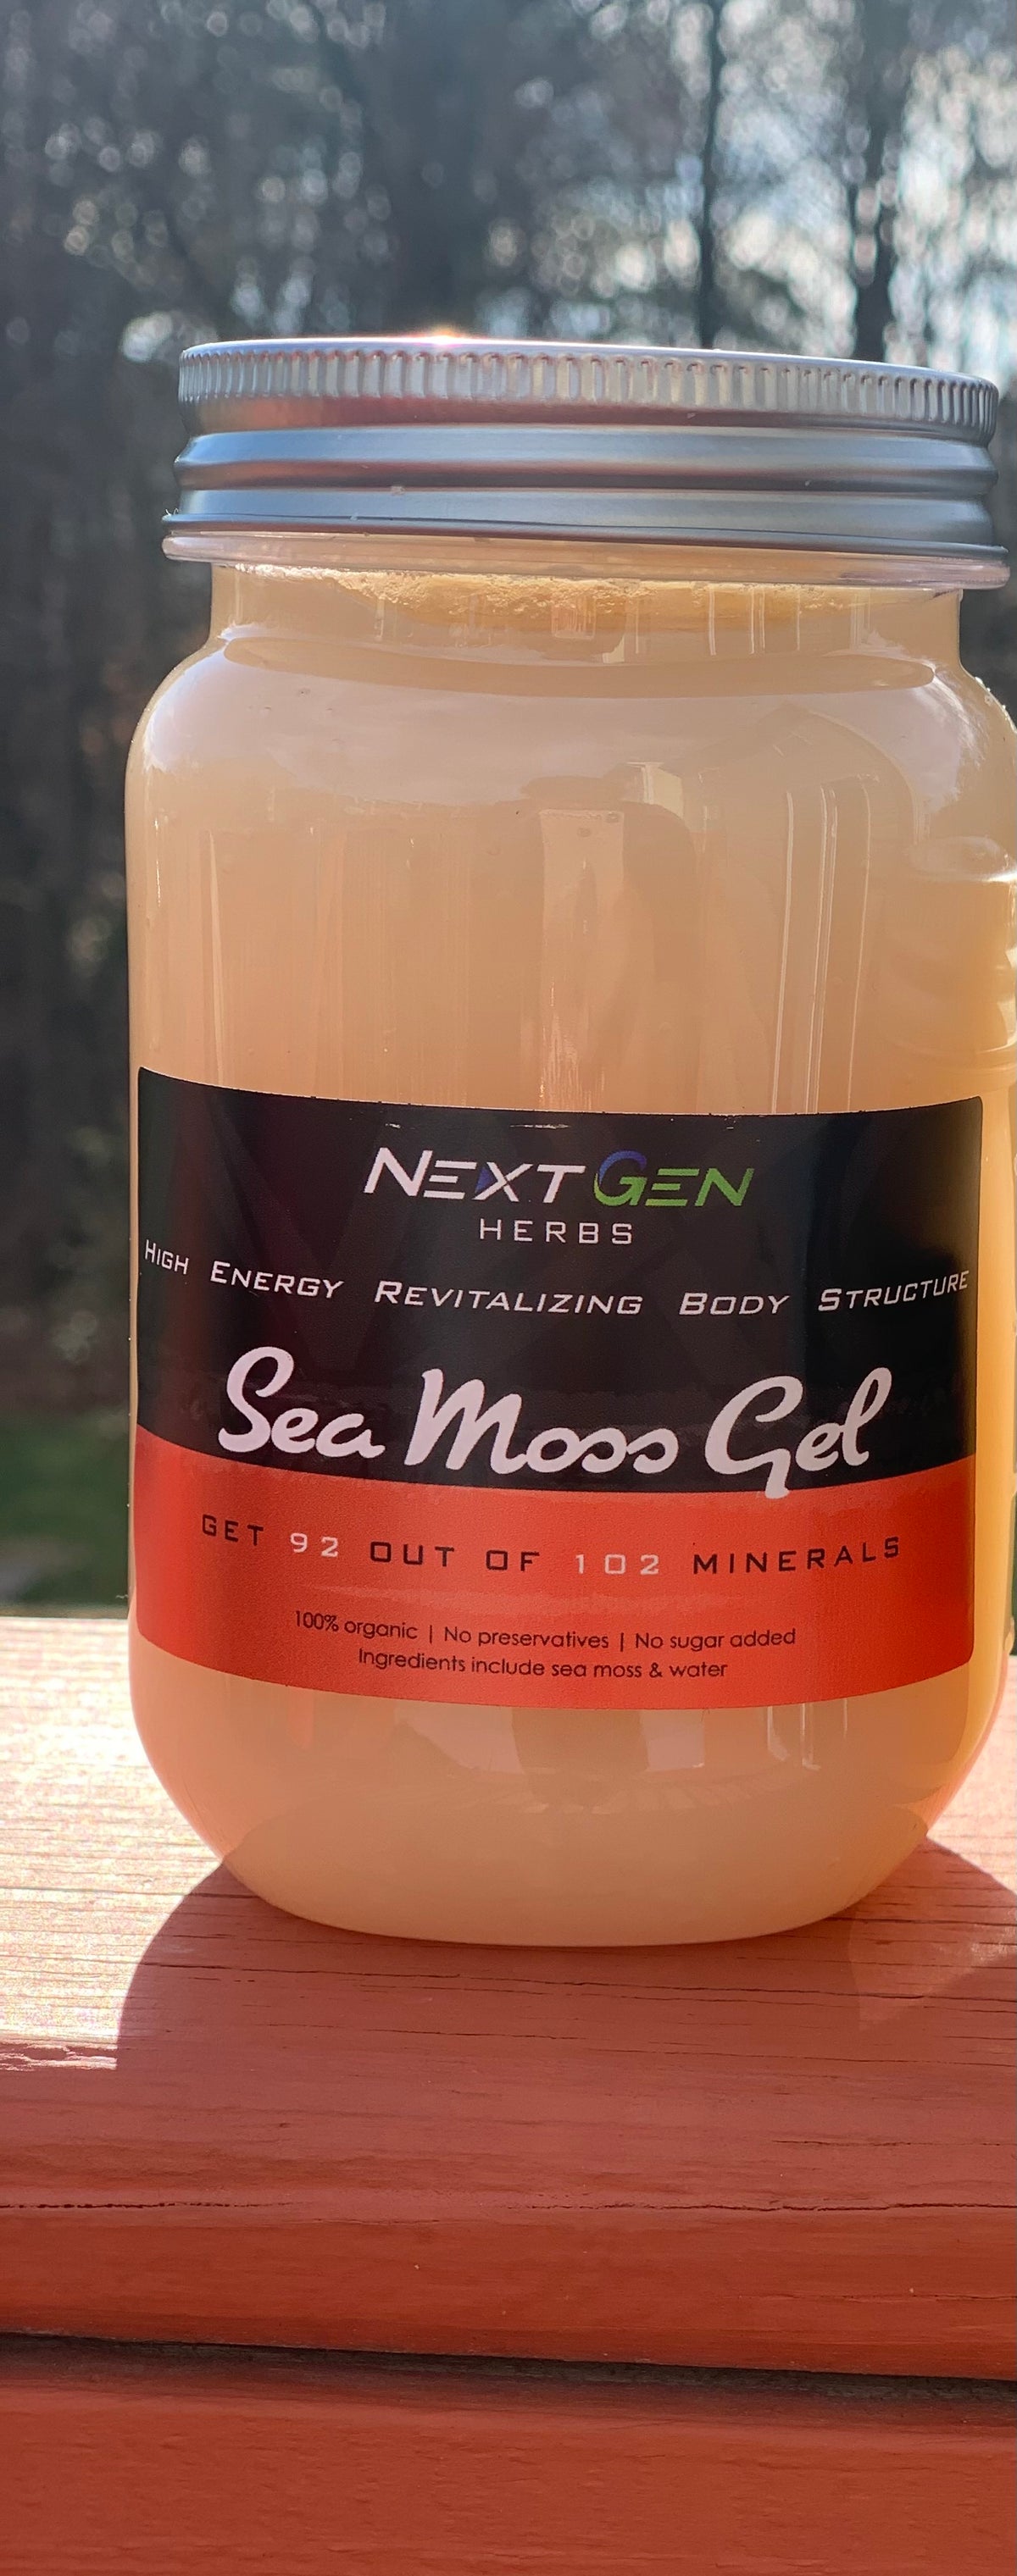 ORIGINAL SEA MOSS GEL - Next Generation Herbs 